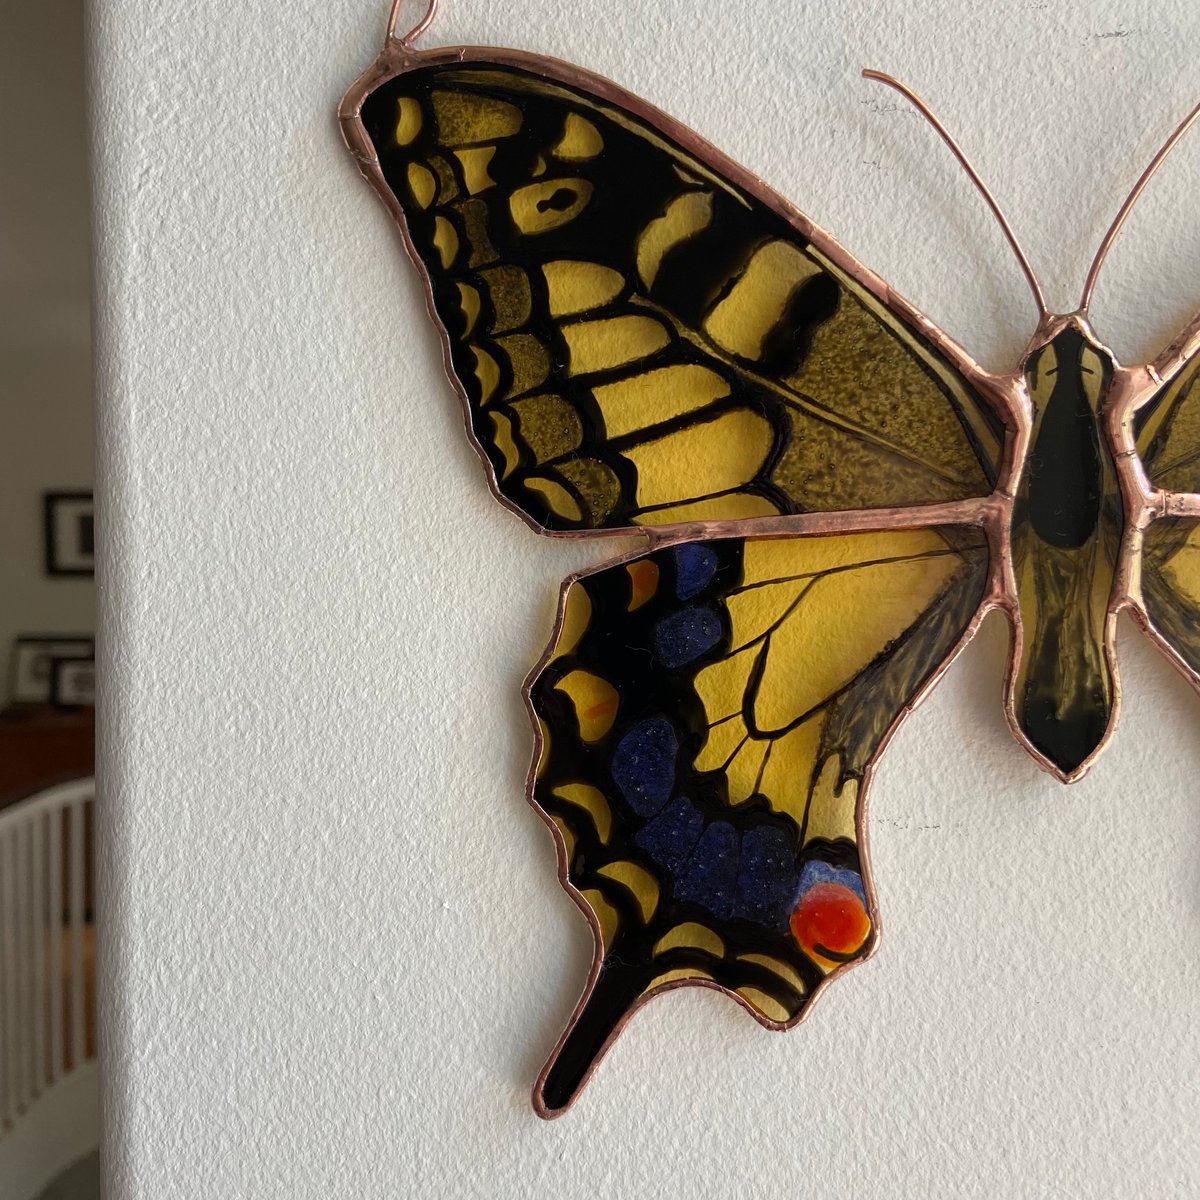 Old World Swallowtail Butterfly Sticker — FIELD GUIDE DESIGNS